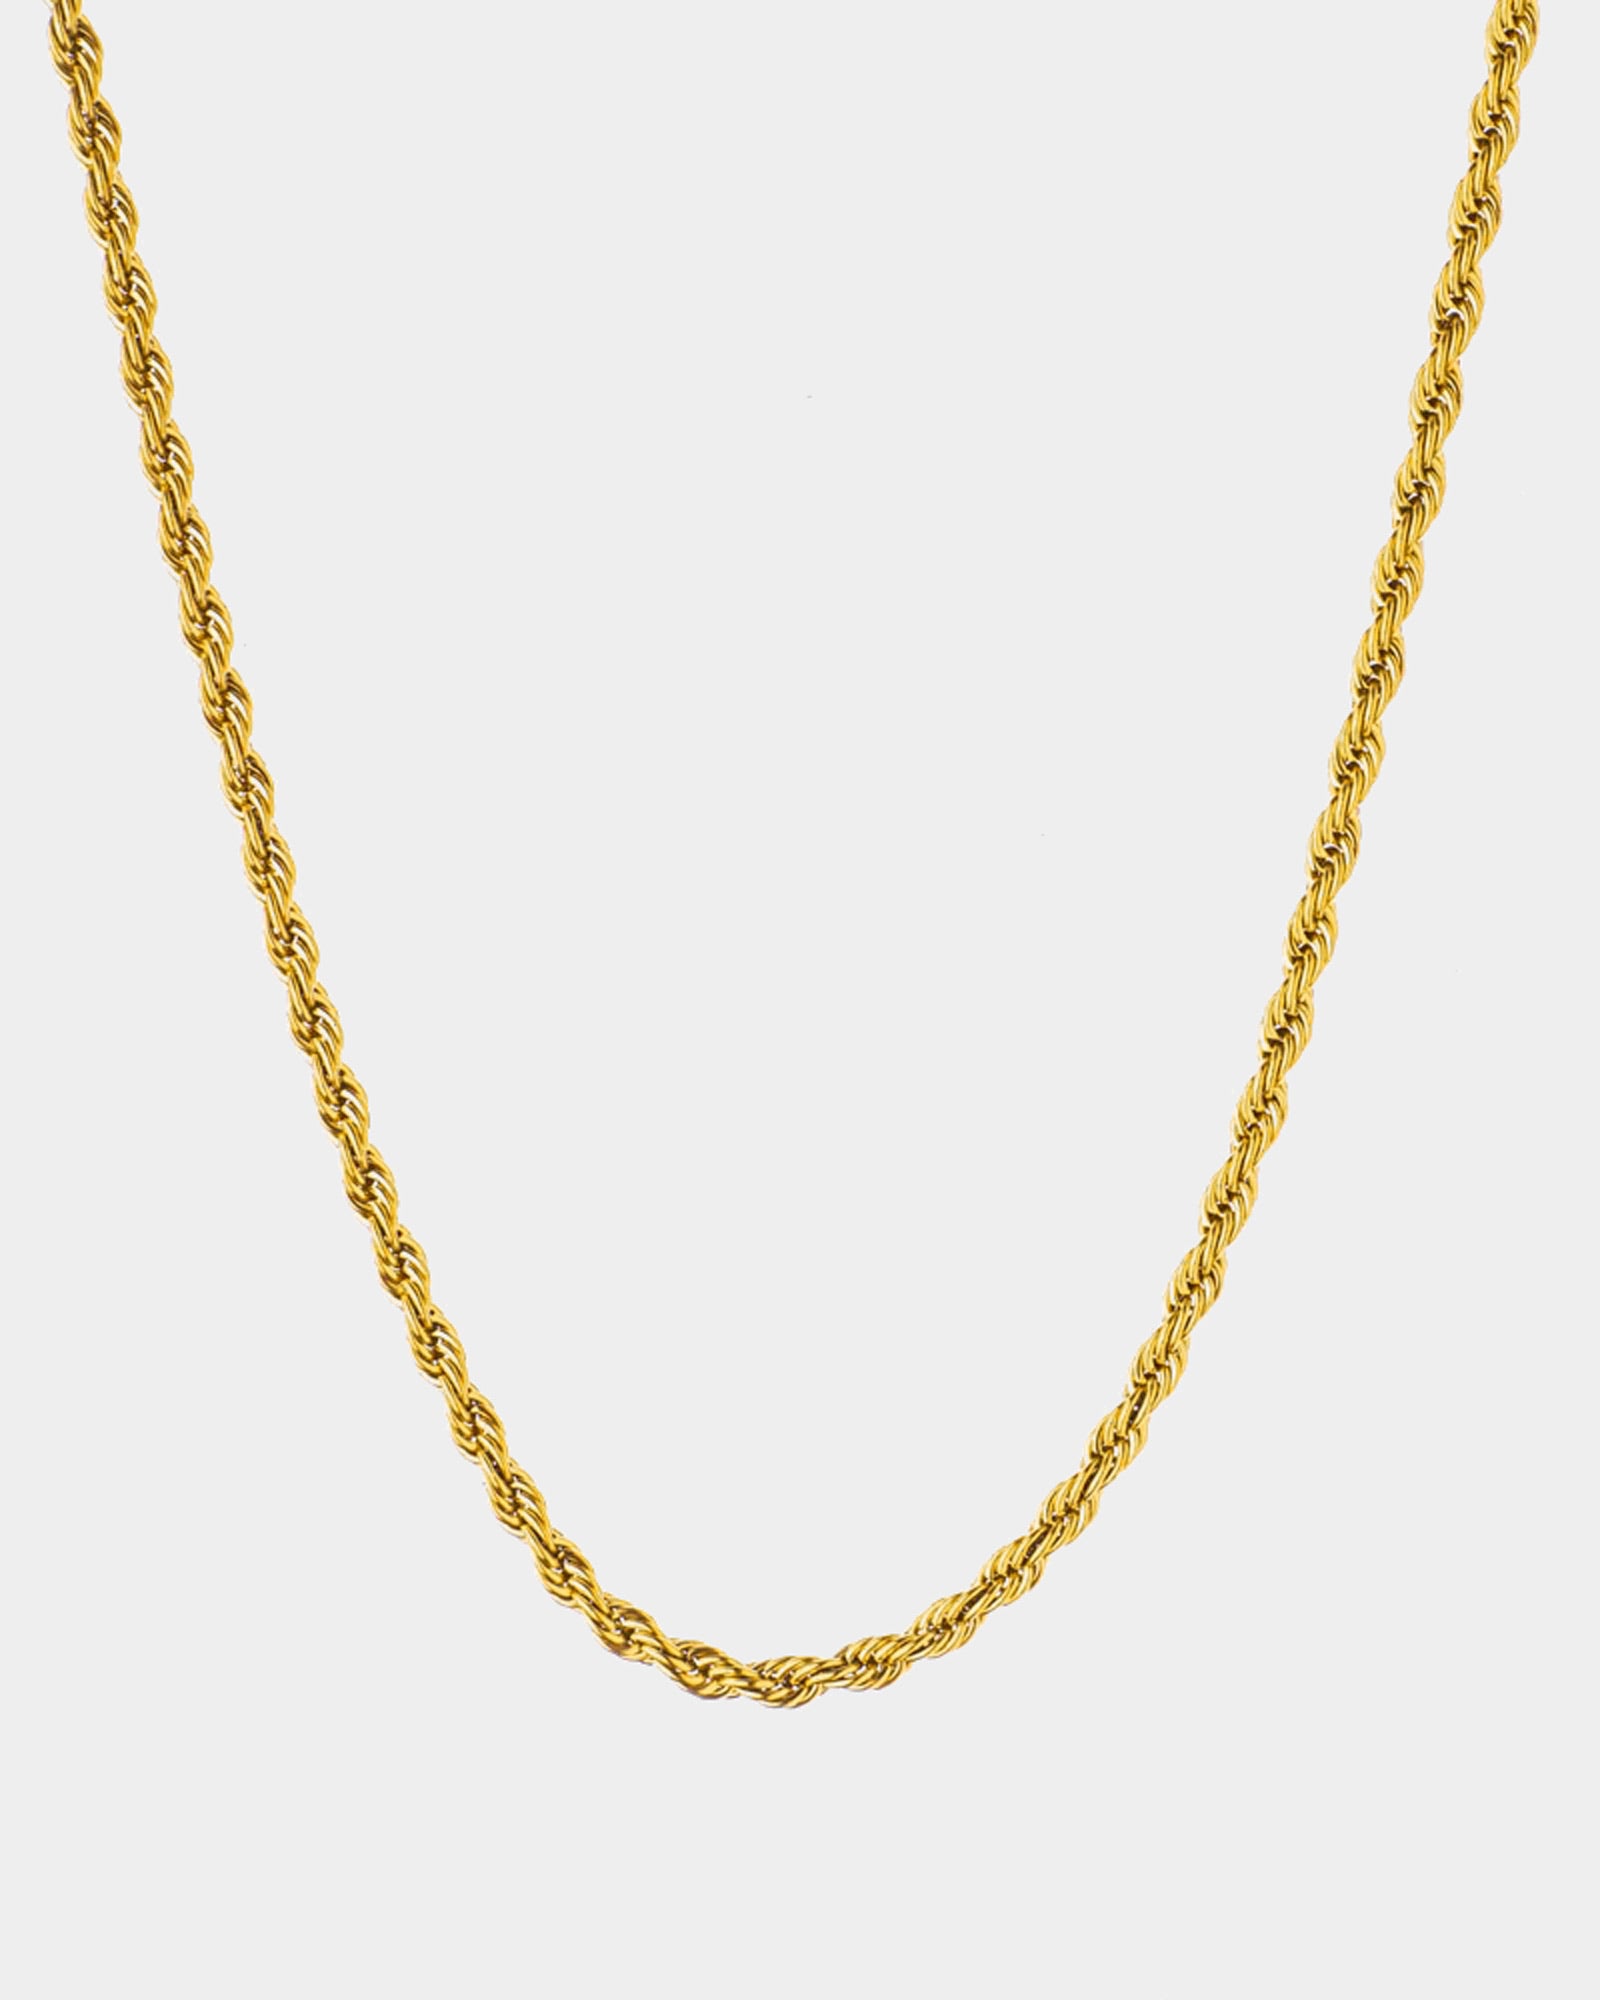 Raso - Golden Stainless Steel Necklace Raso - Online Unissex Jewelry - Dicci